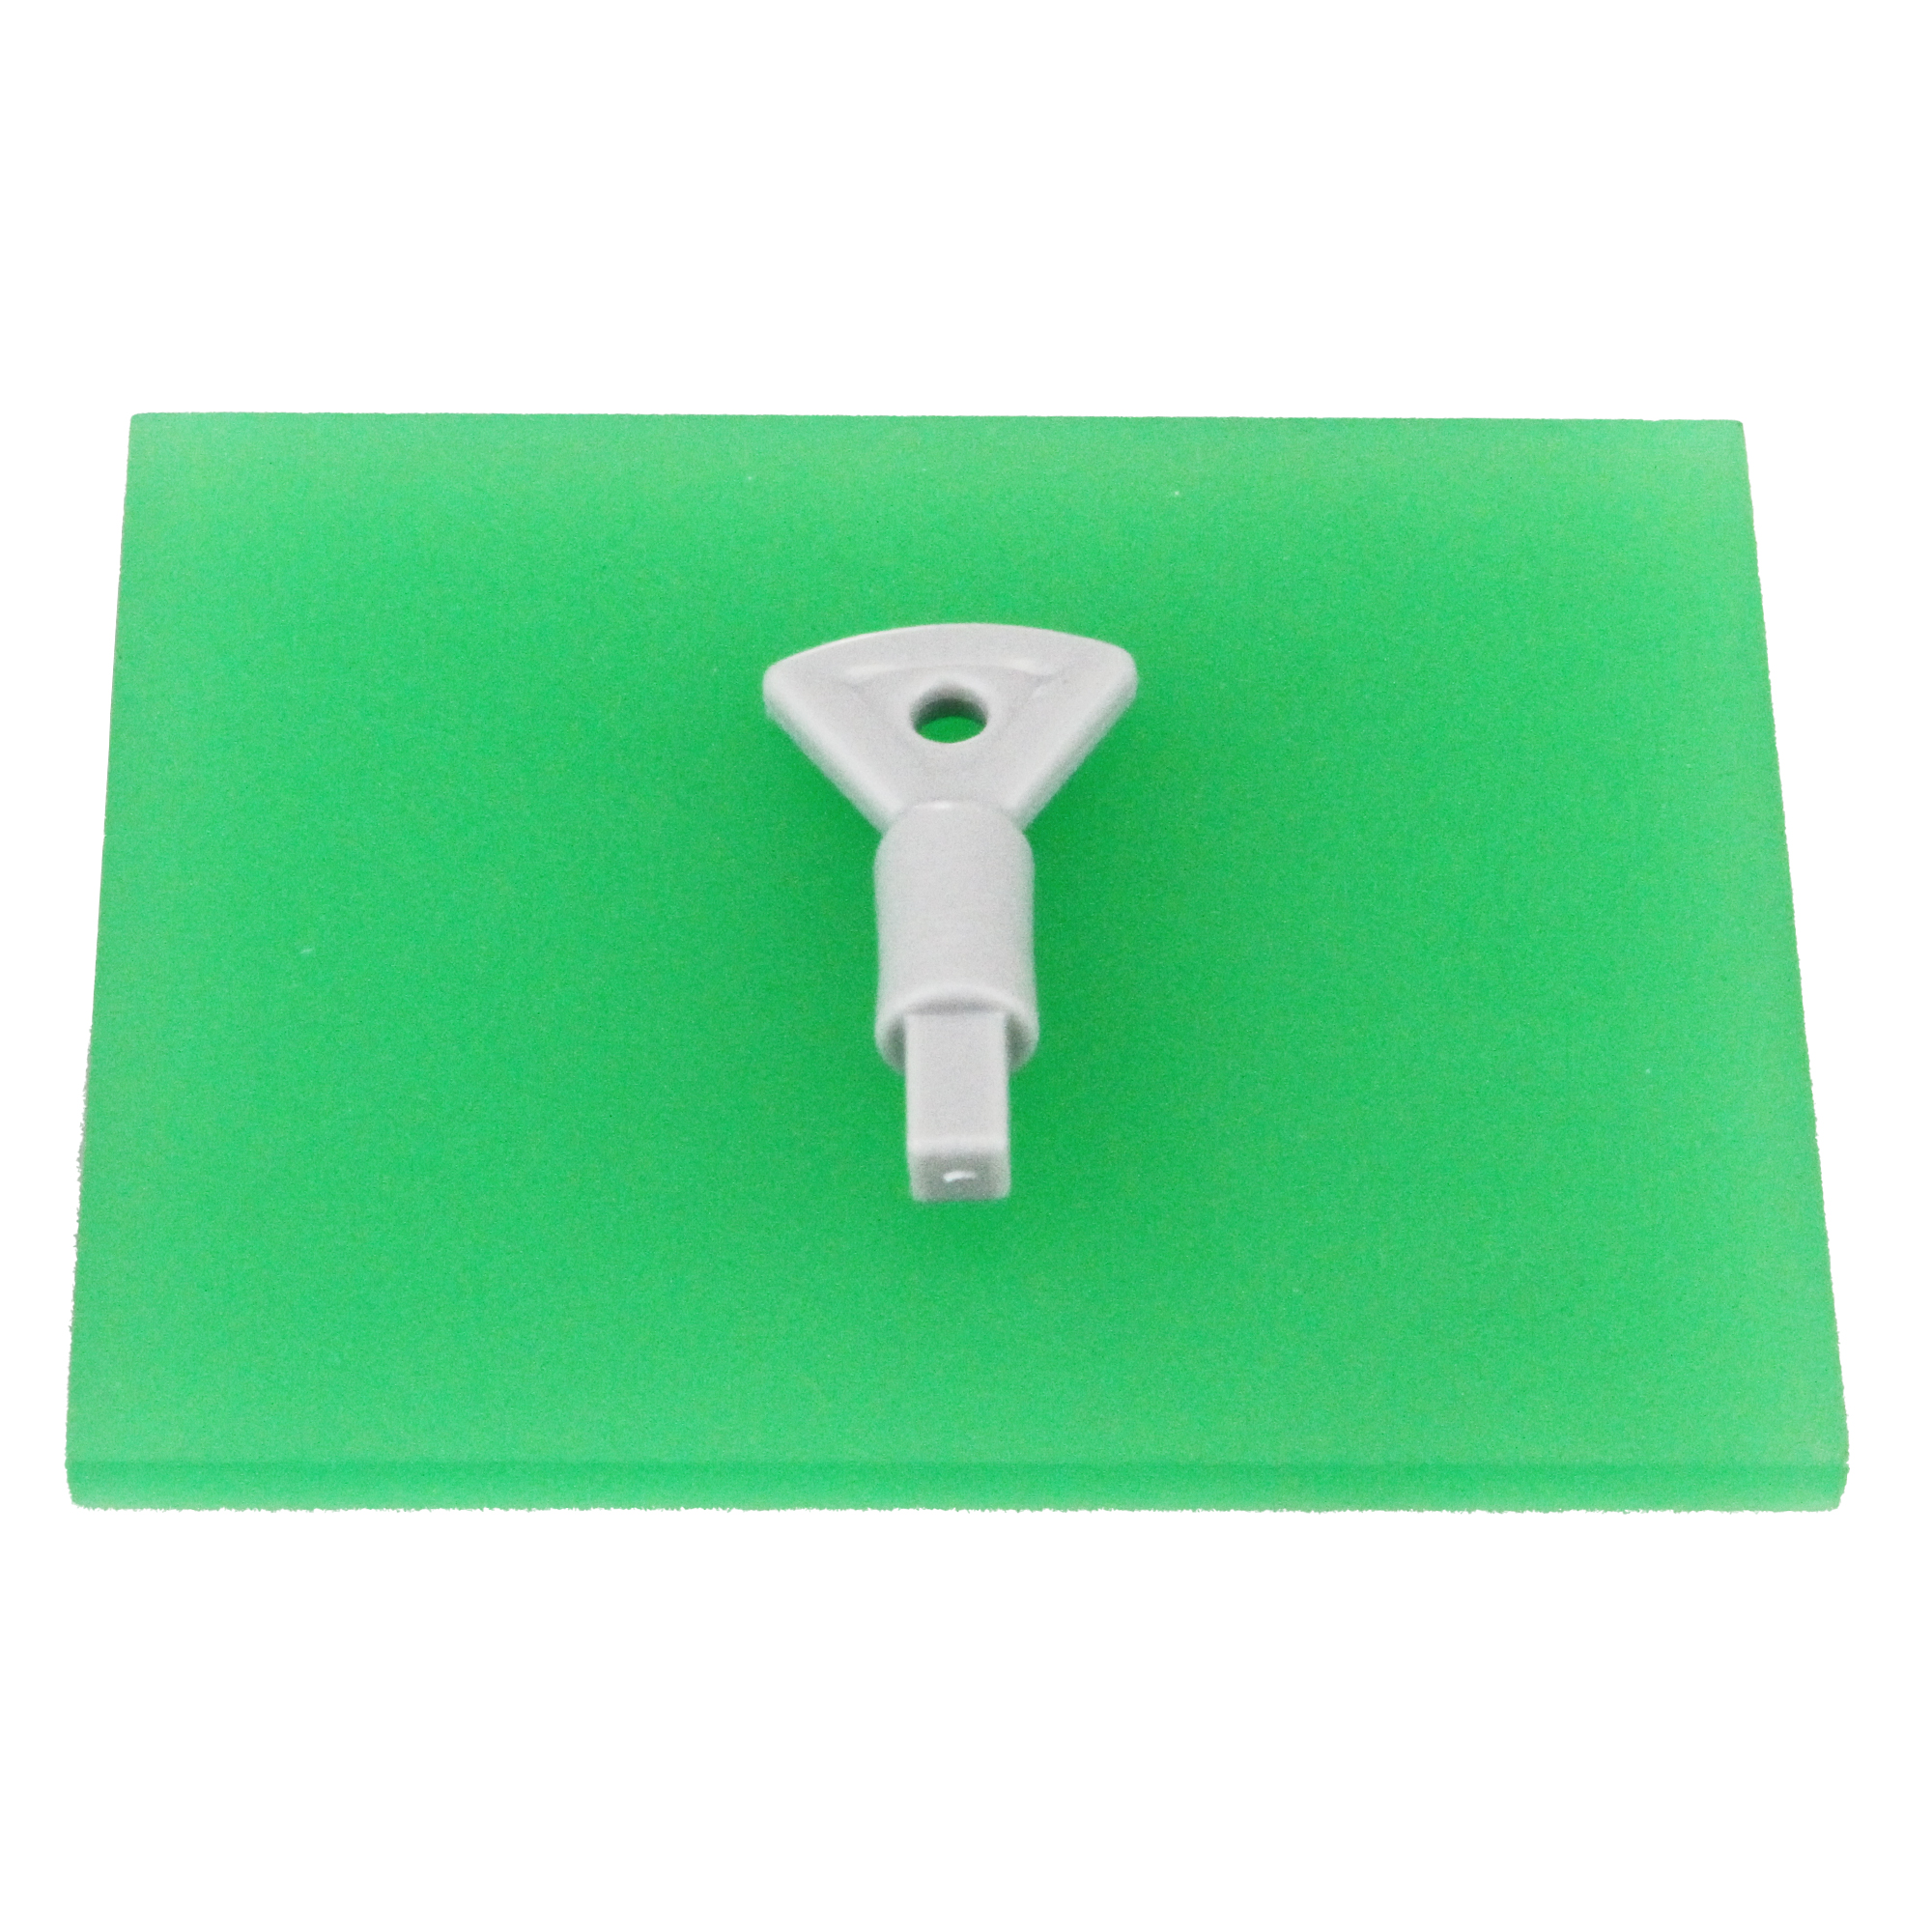 Schlüssel für Maxi Jumbo Toilettenpapierspender SANISMART Ersatzschlüssel